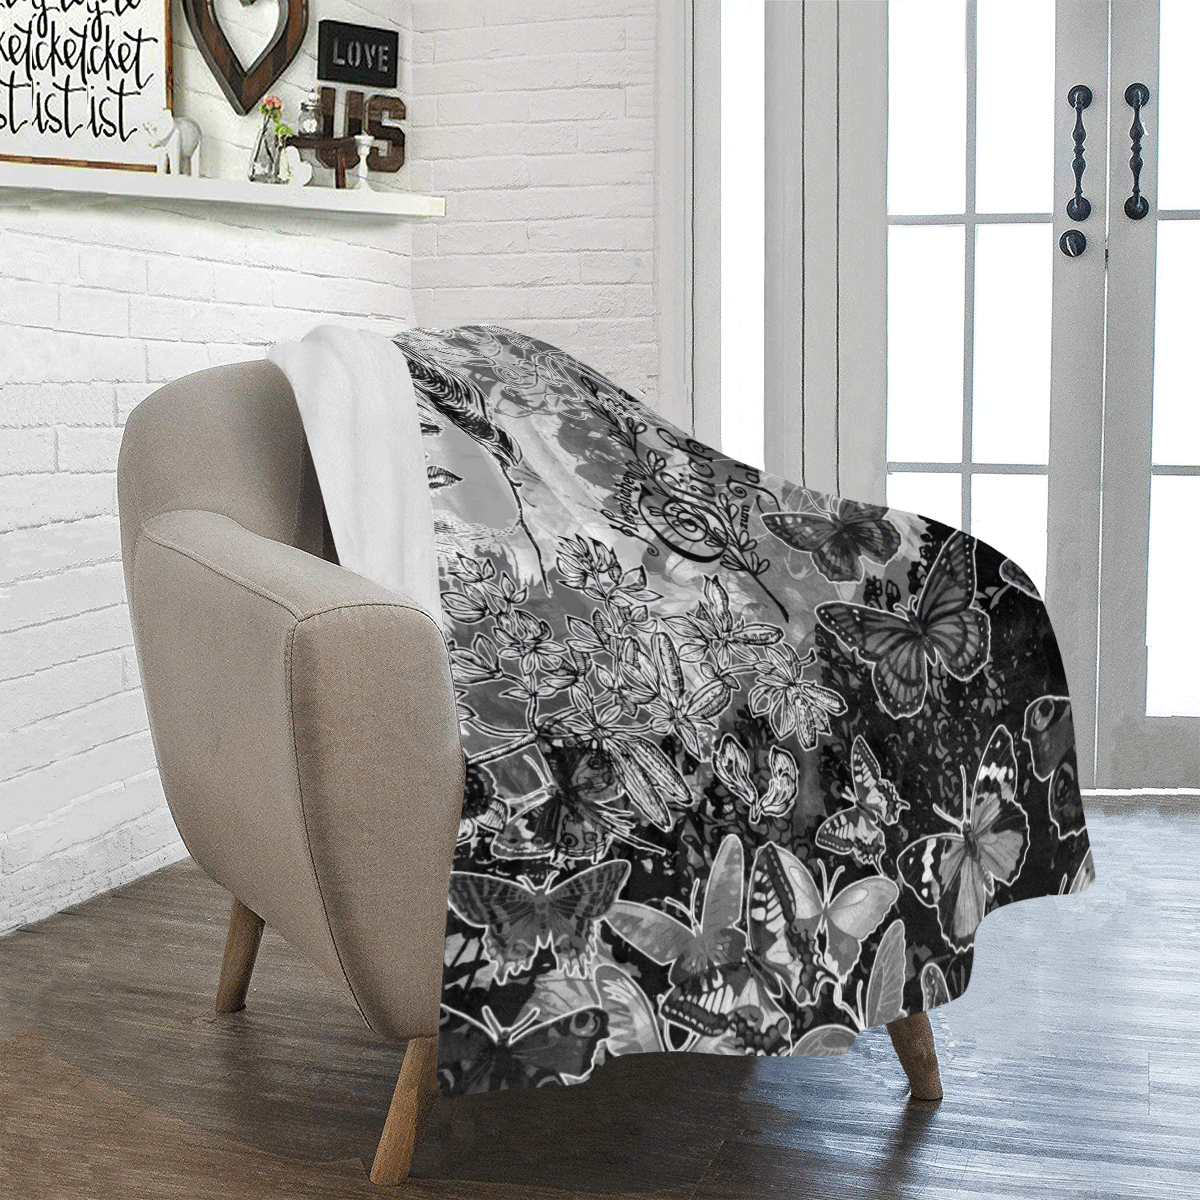 Lady and butterflies Ultra-Soft Micro Fleece Blanket 40"x50"